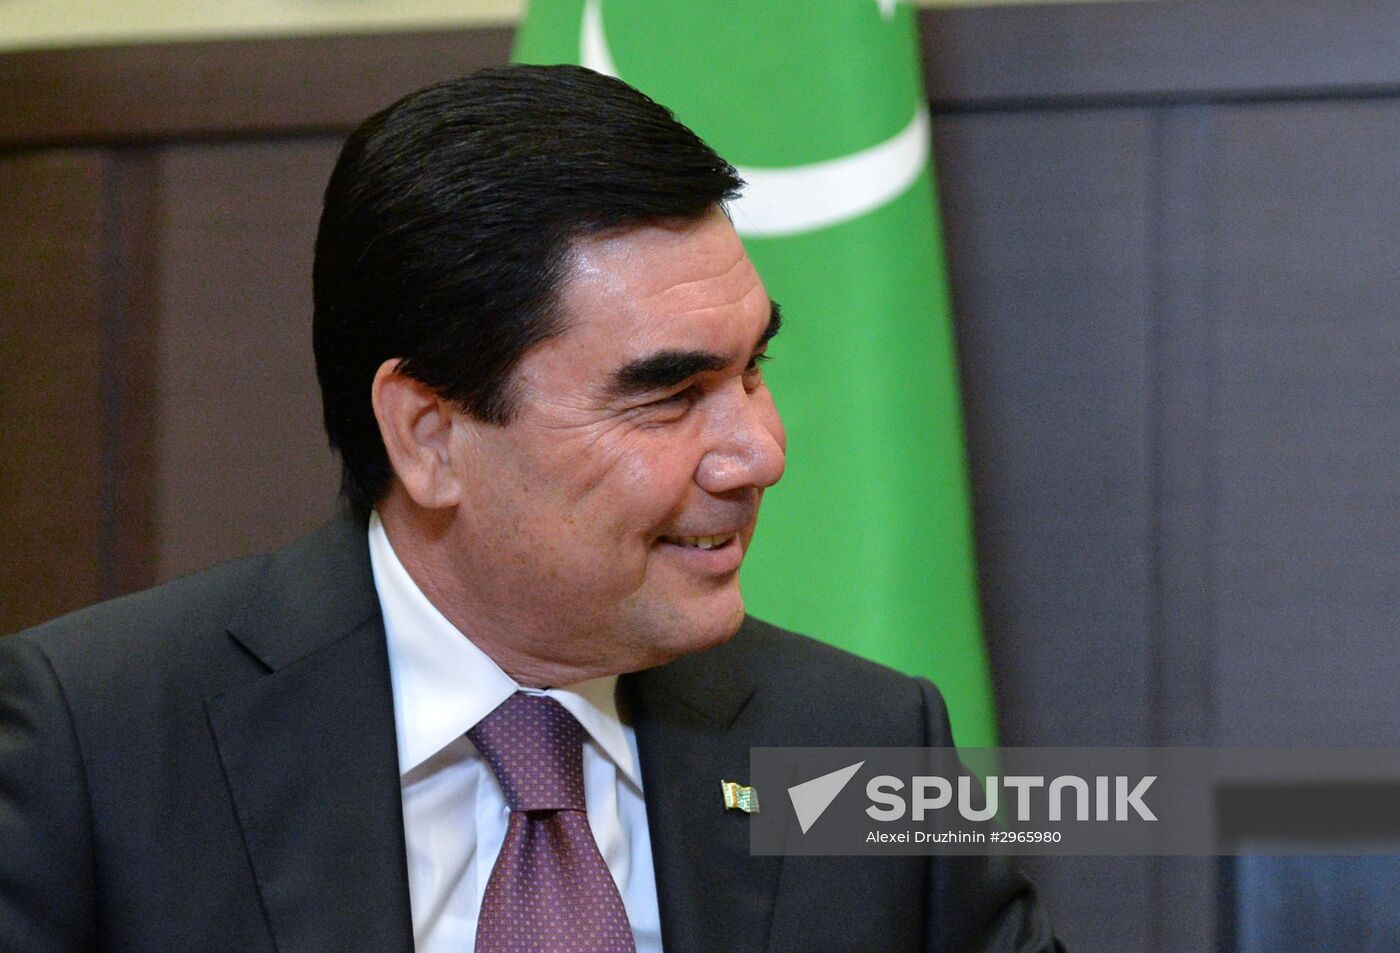 Russian President Vladimir Putin met with Turkmen President Gurbanguly Berdimuhamedov